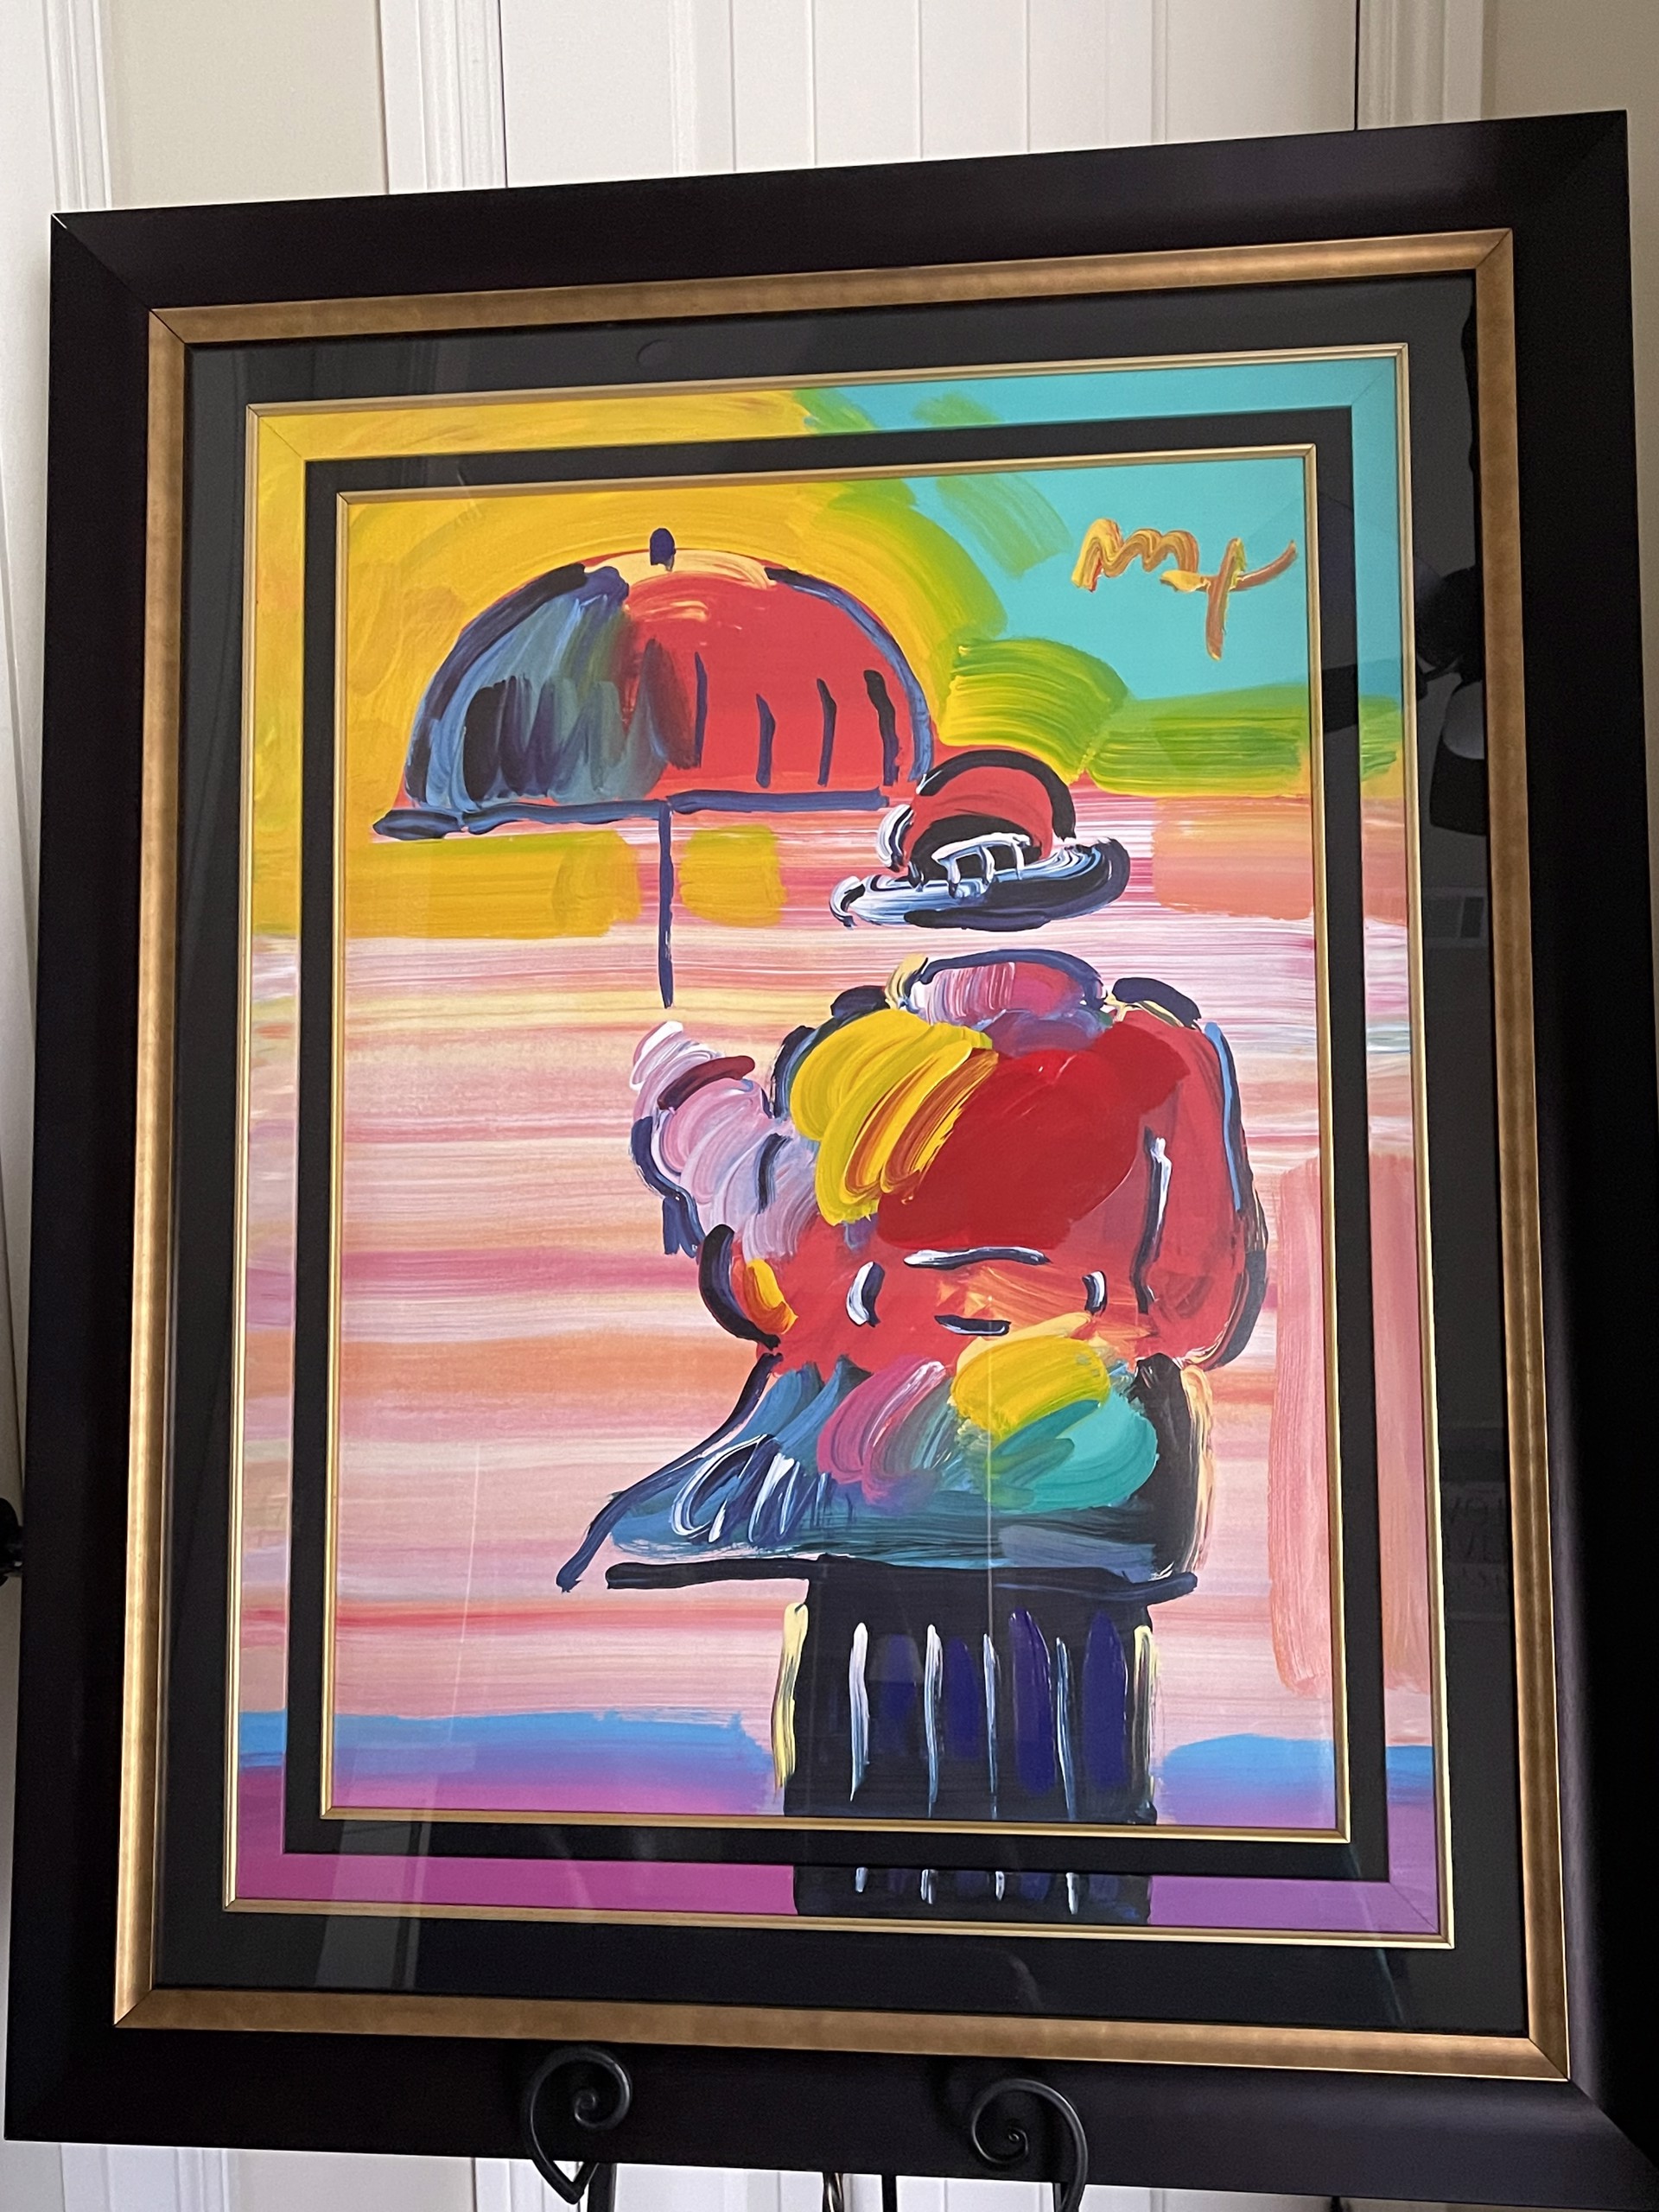 Umbrella Man by Peter Max